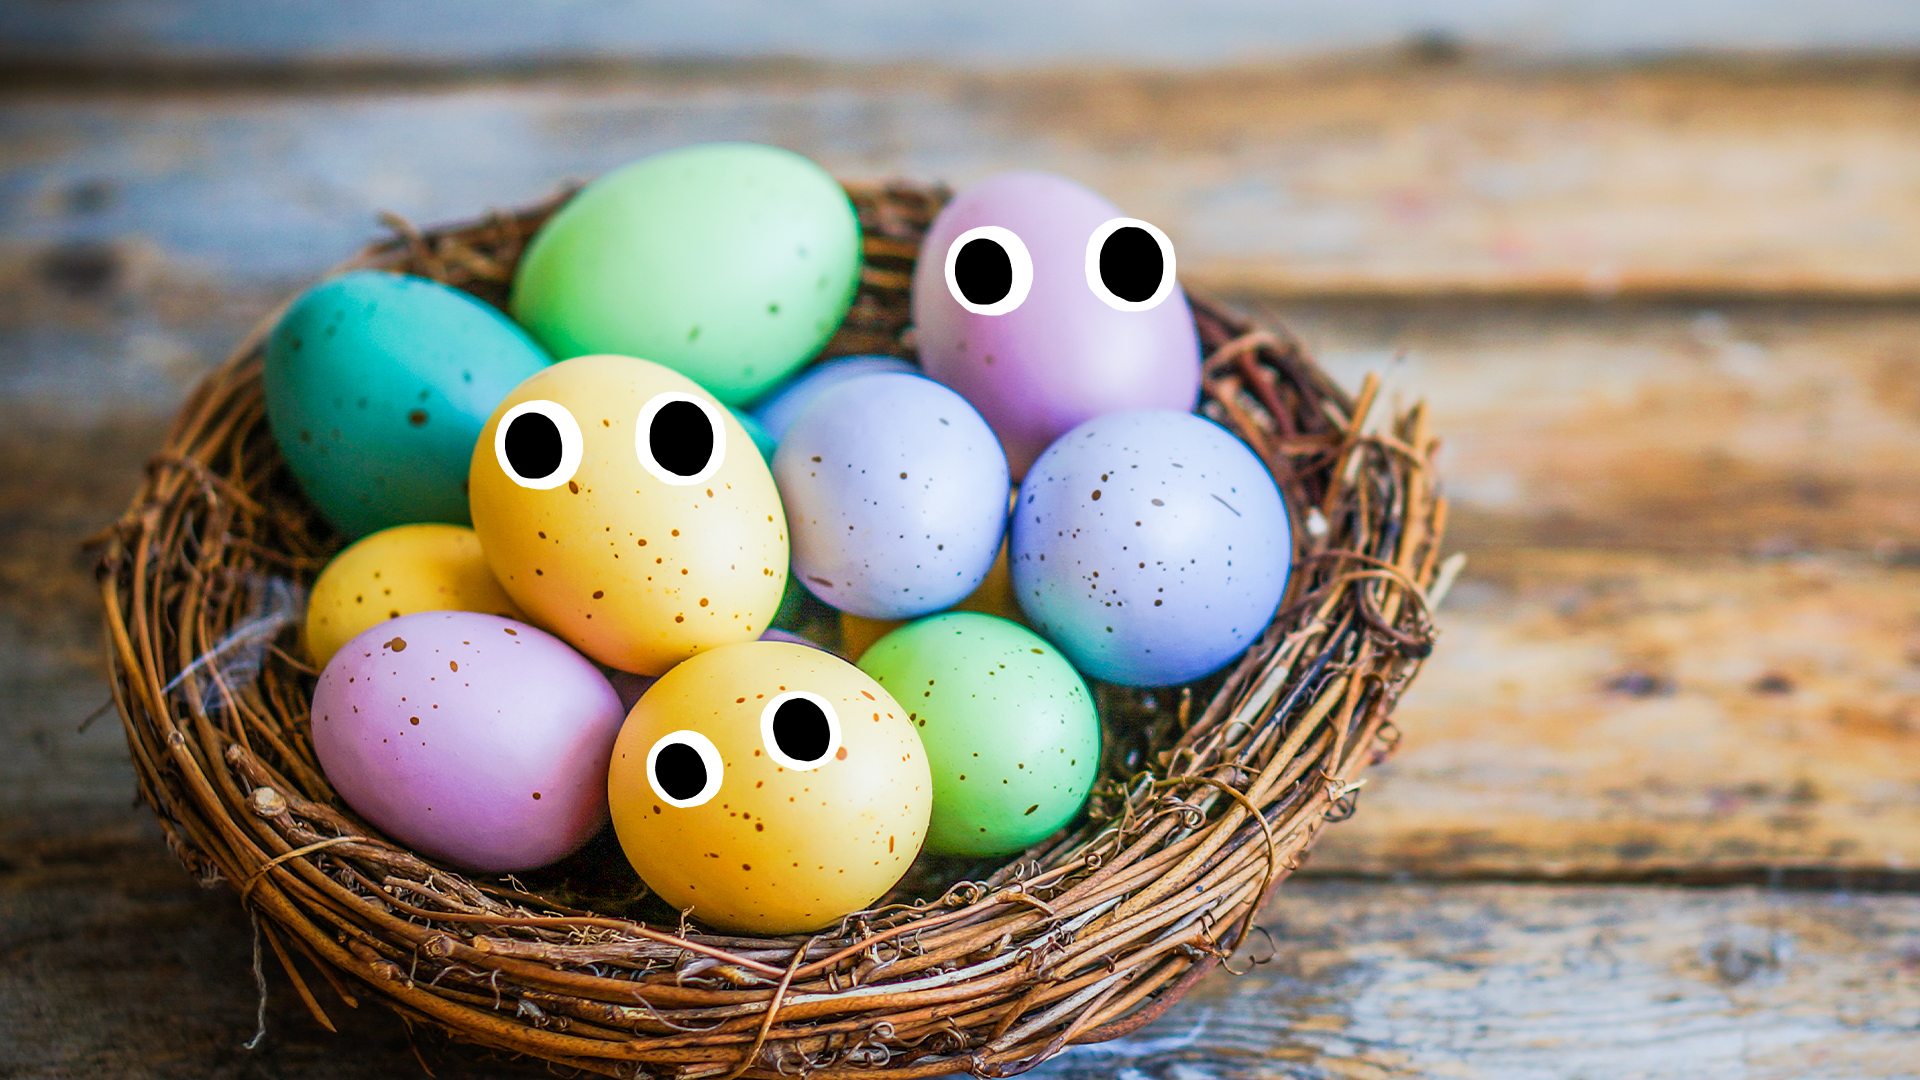 Basket full of Easter eggs with eyes